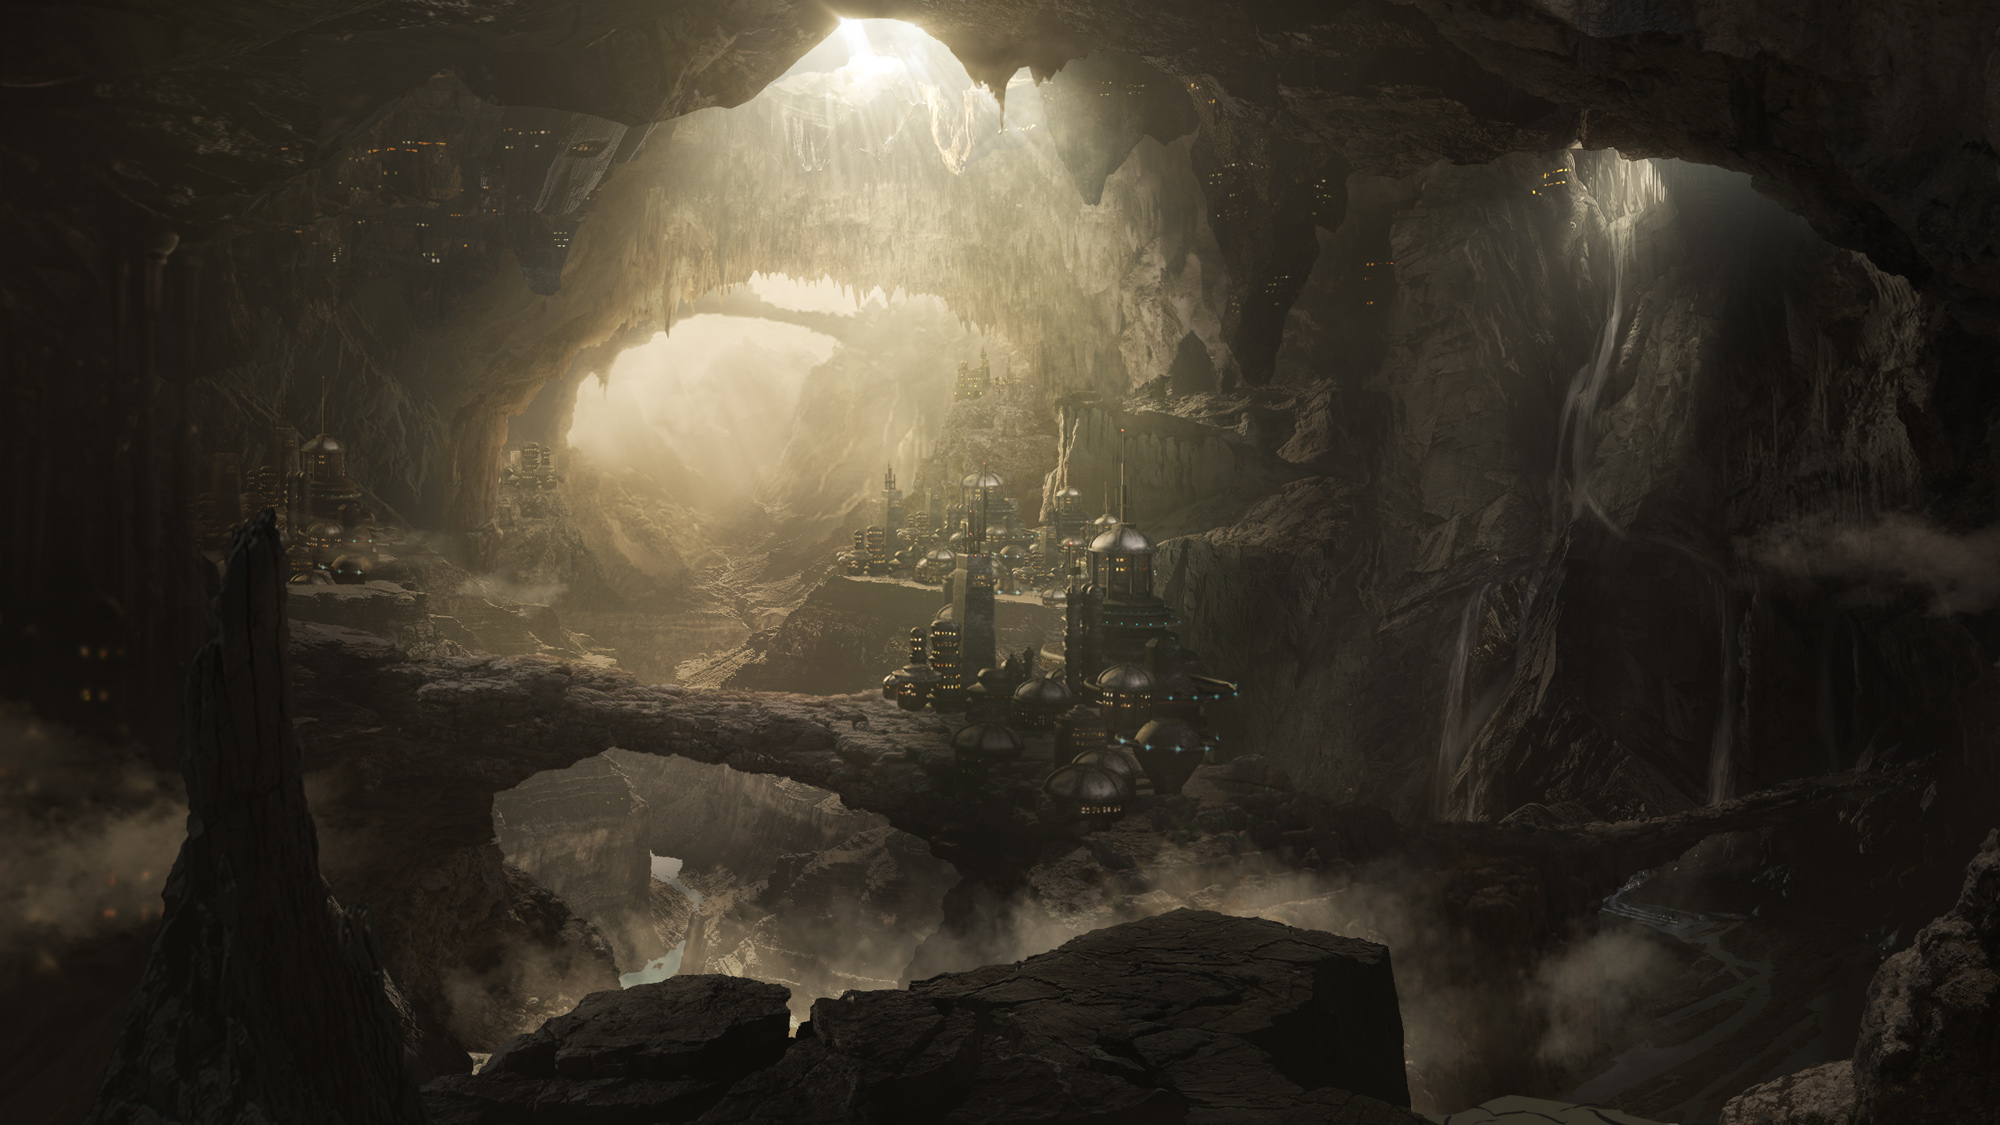 General 2000x1125 digital art science fiction cave rock formation landscape futuristic artwork